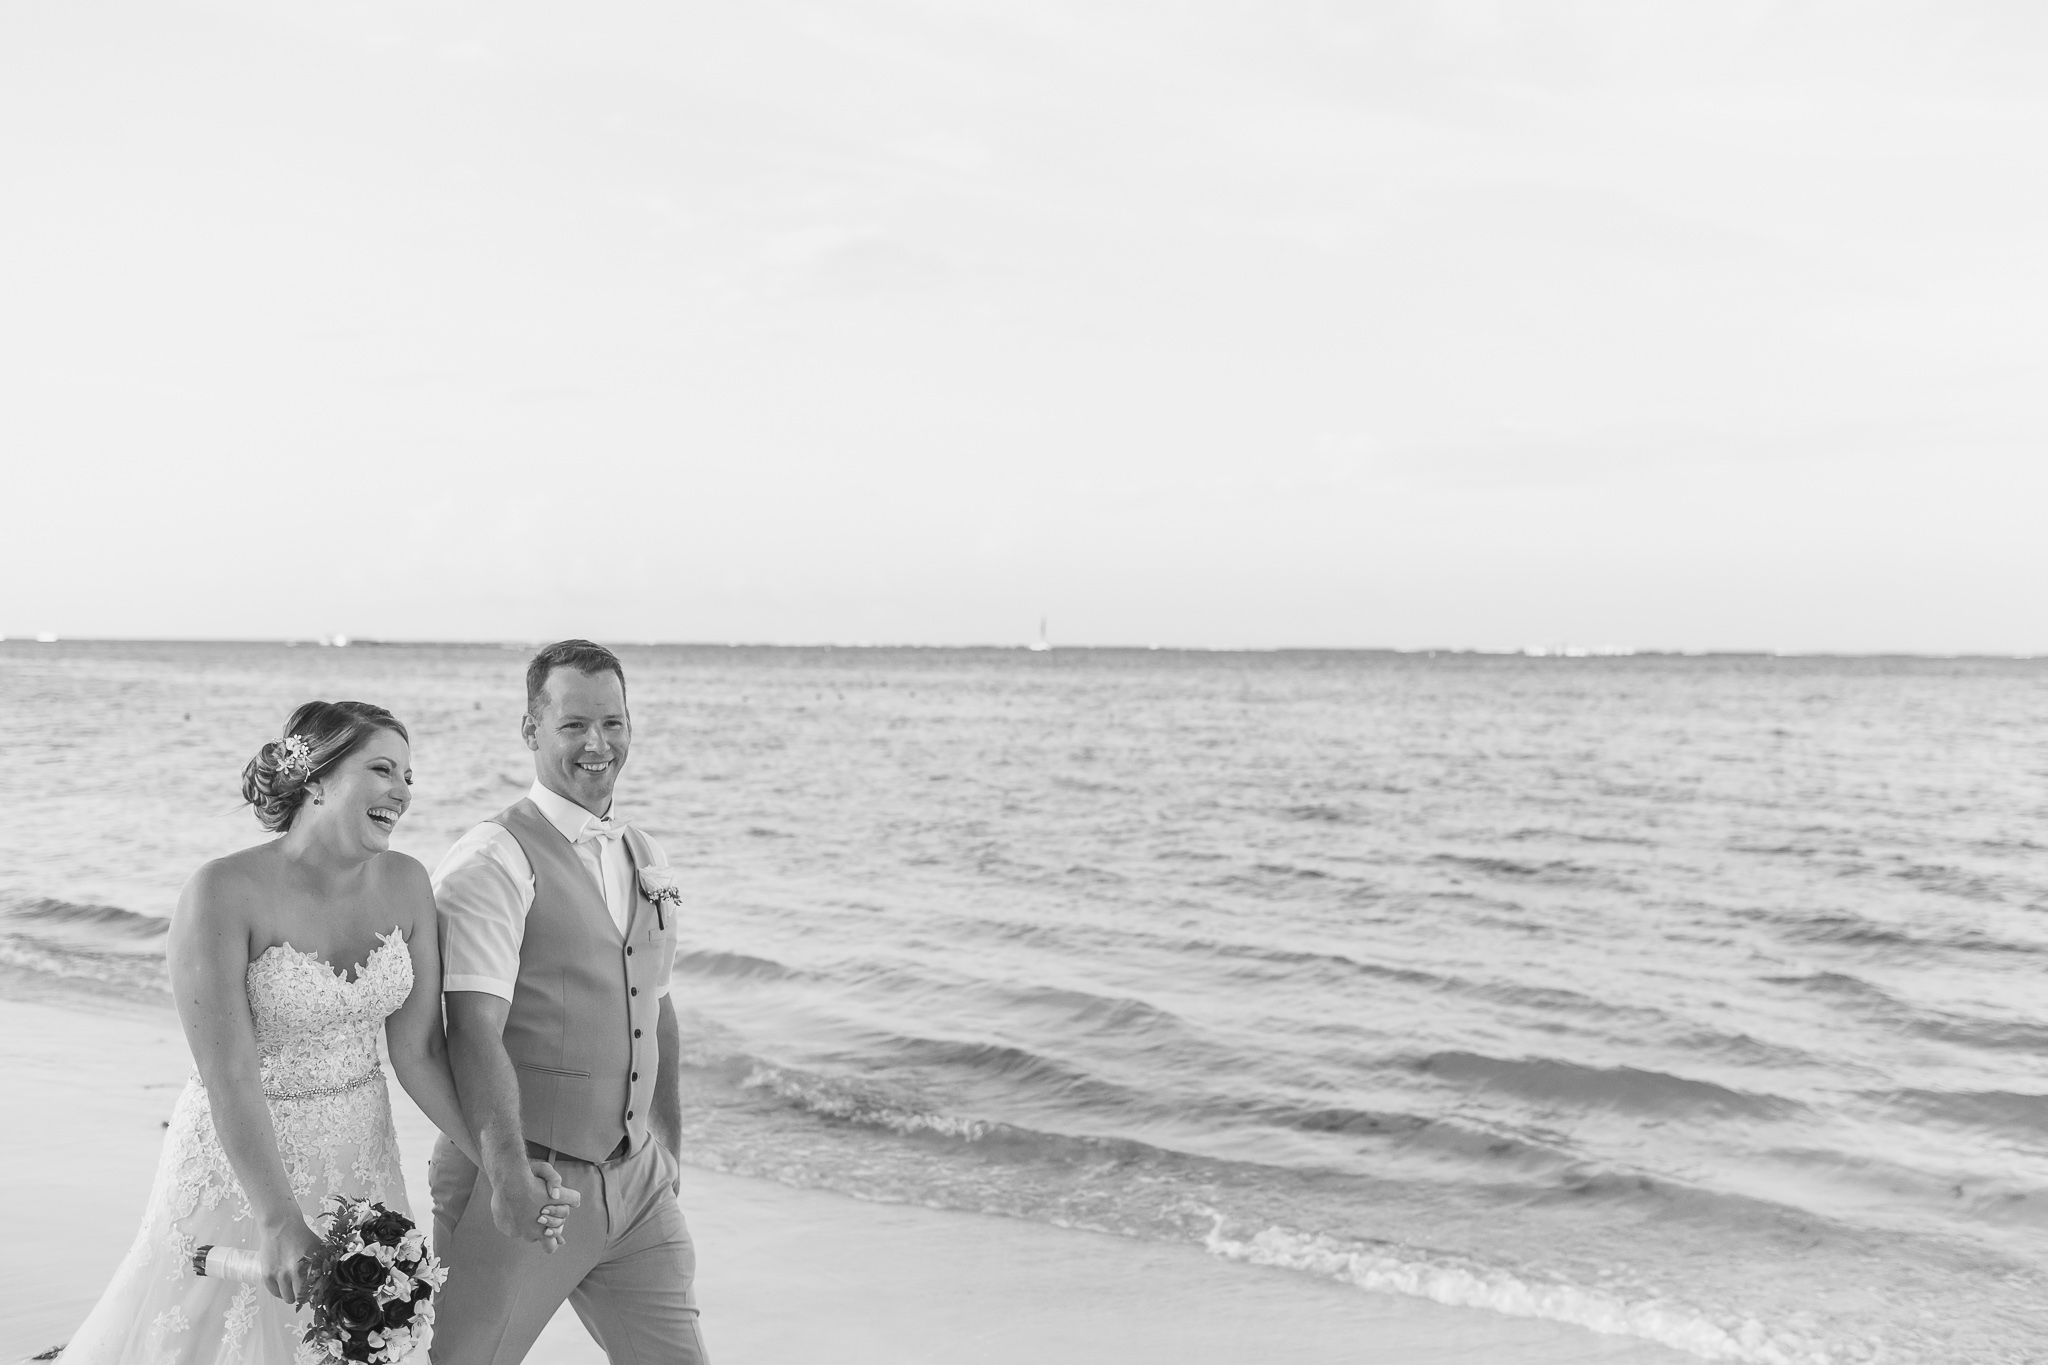 Wedding couple walking holding hands on beach